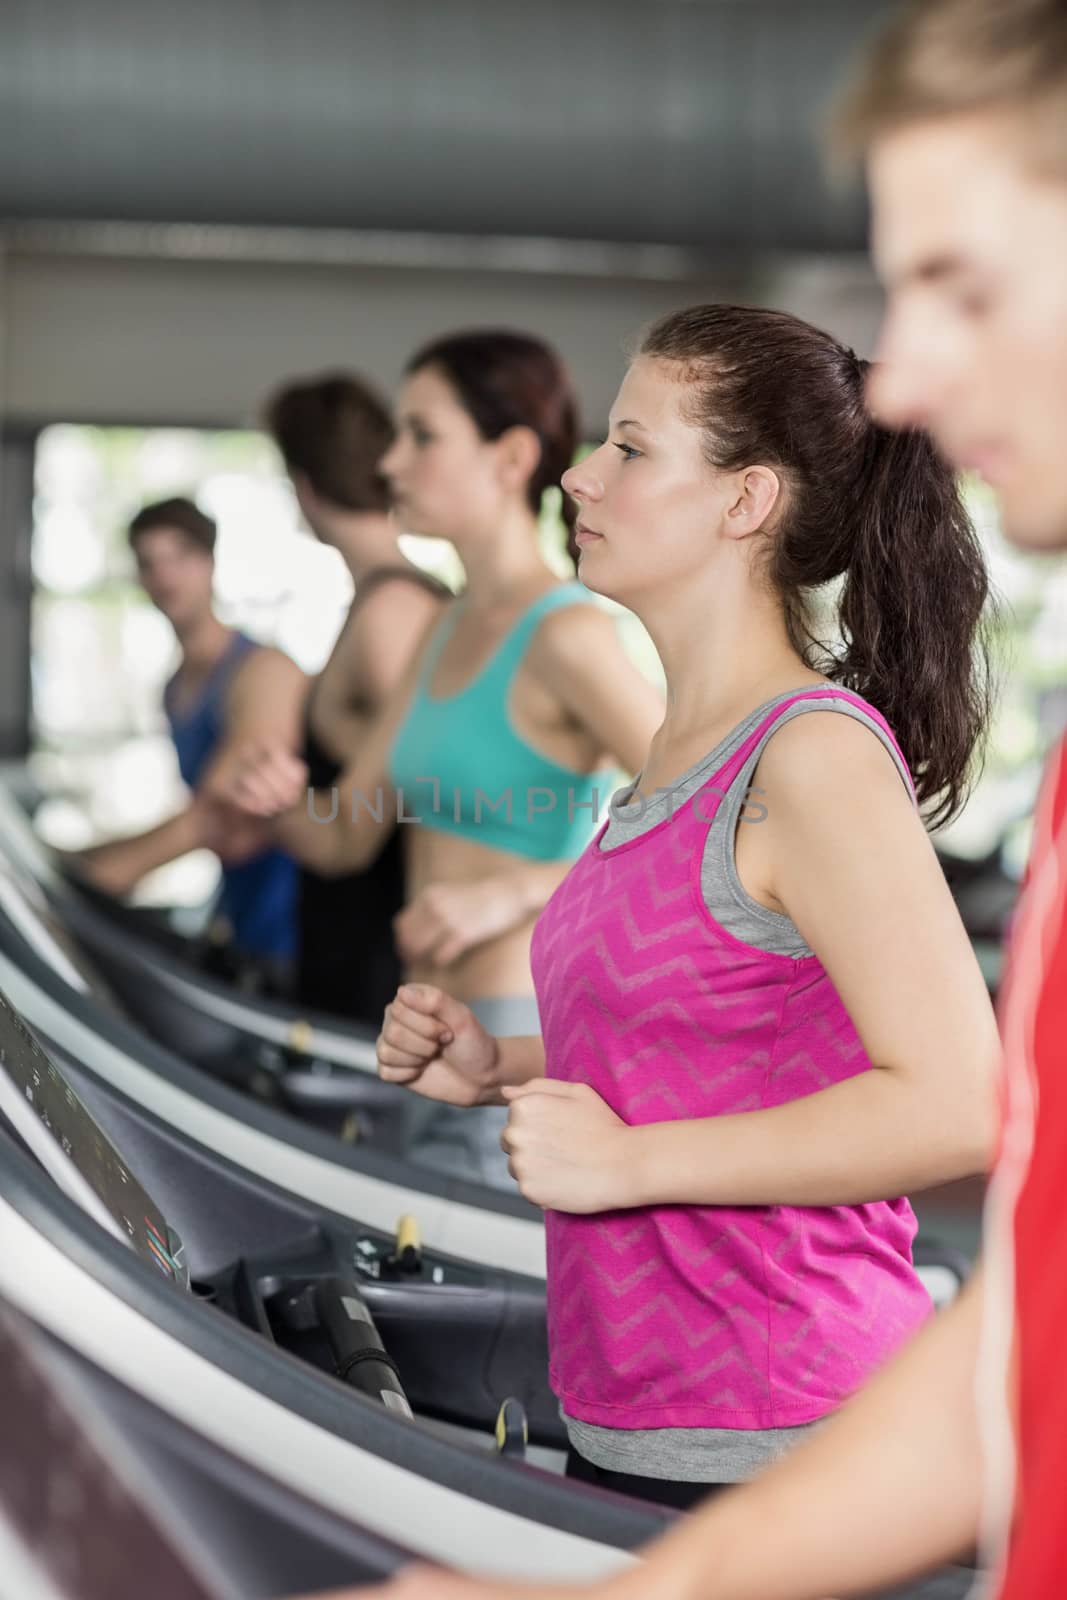 Smiling muscular woman on treadmill by Wavebreakmedia